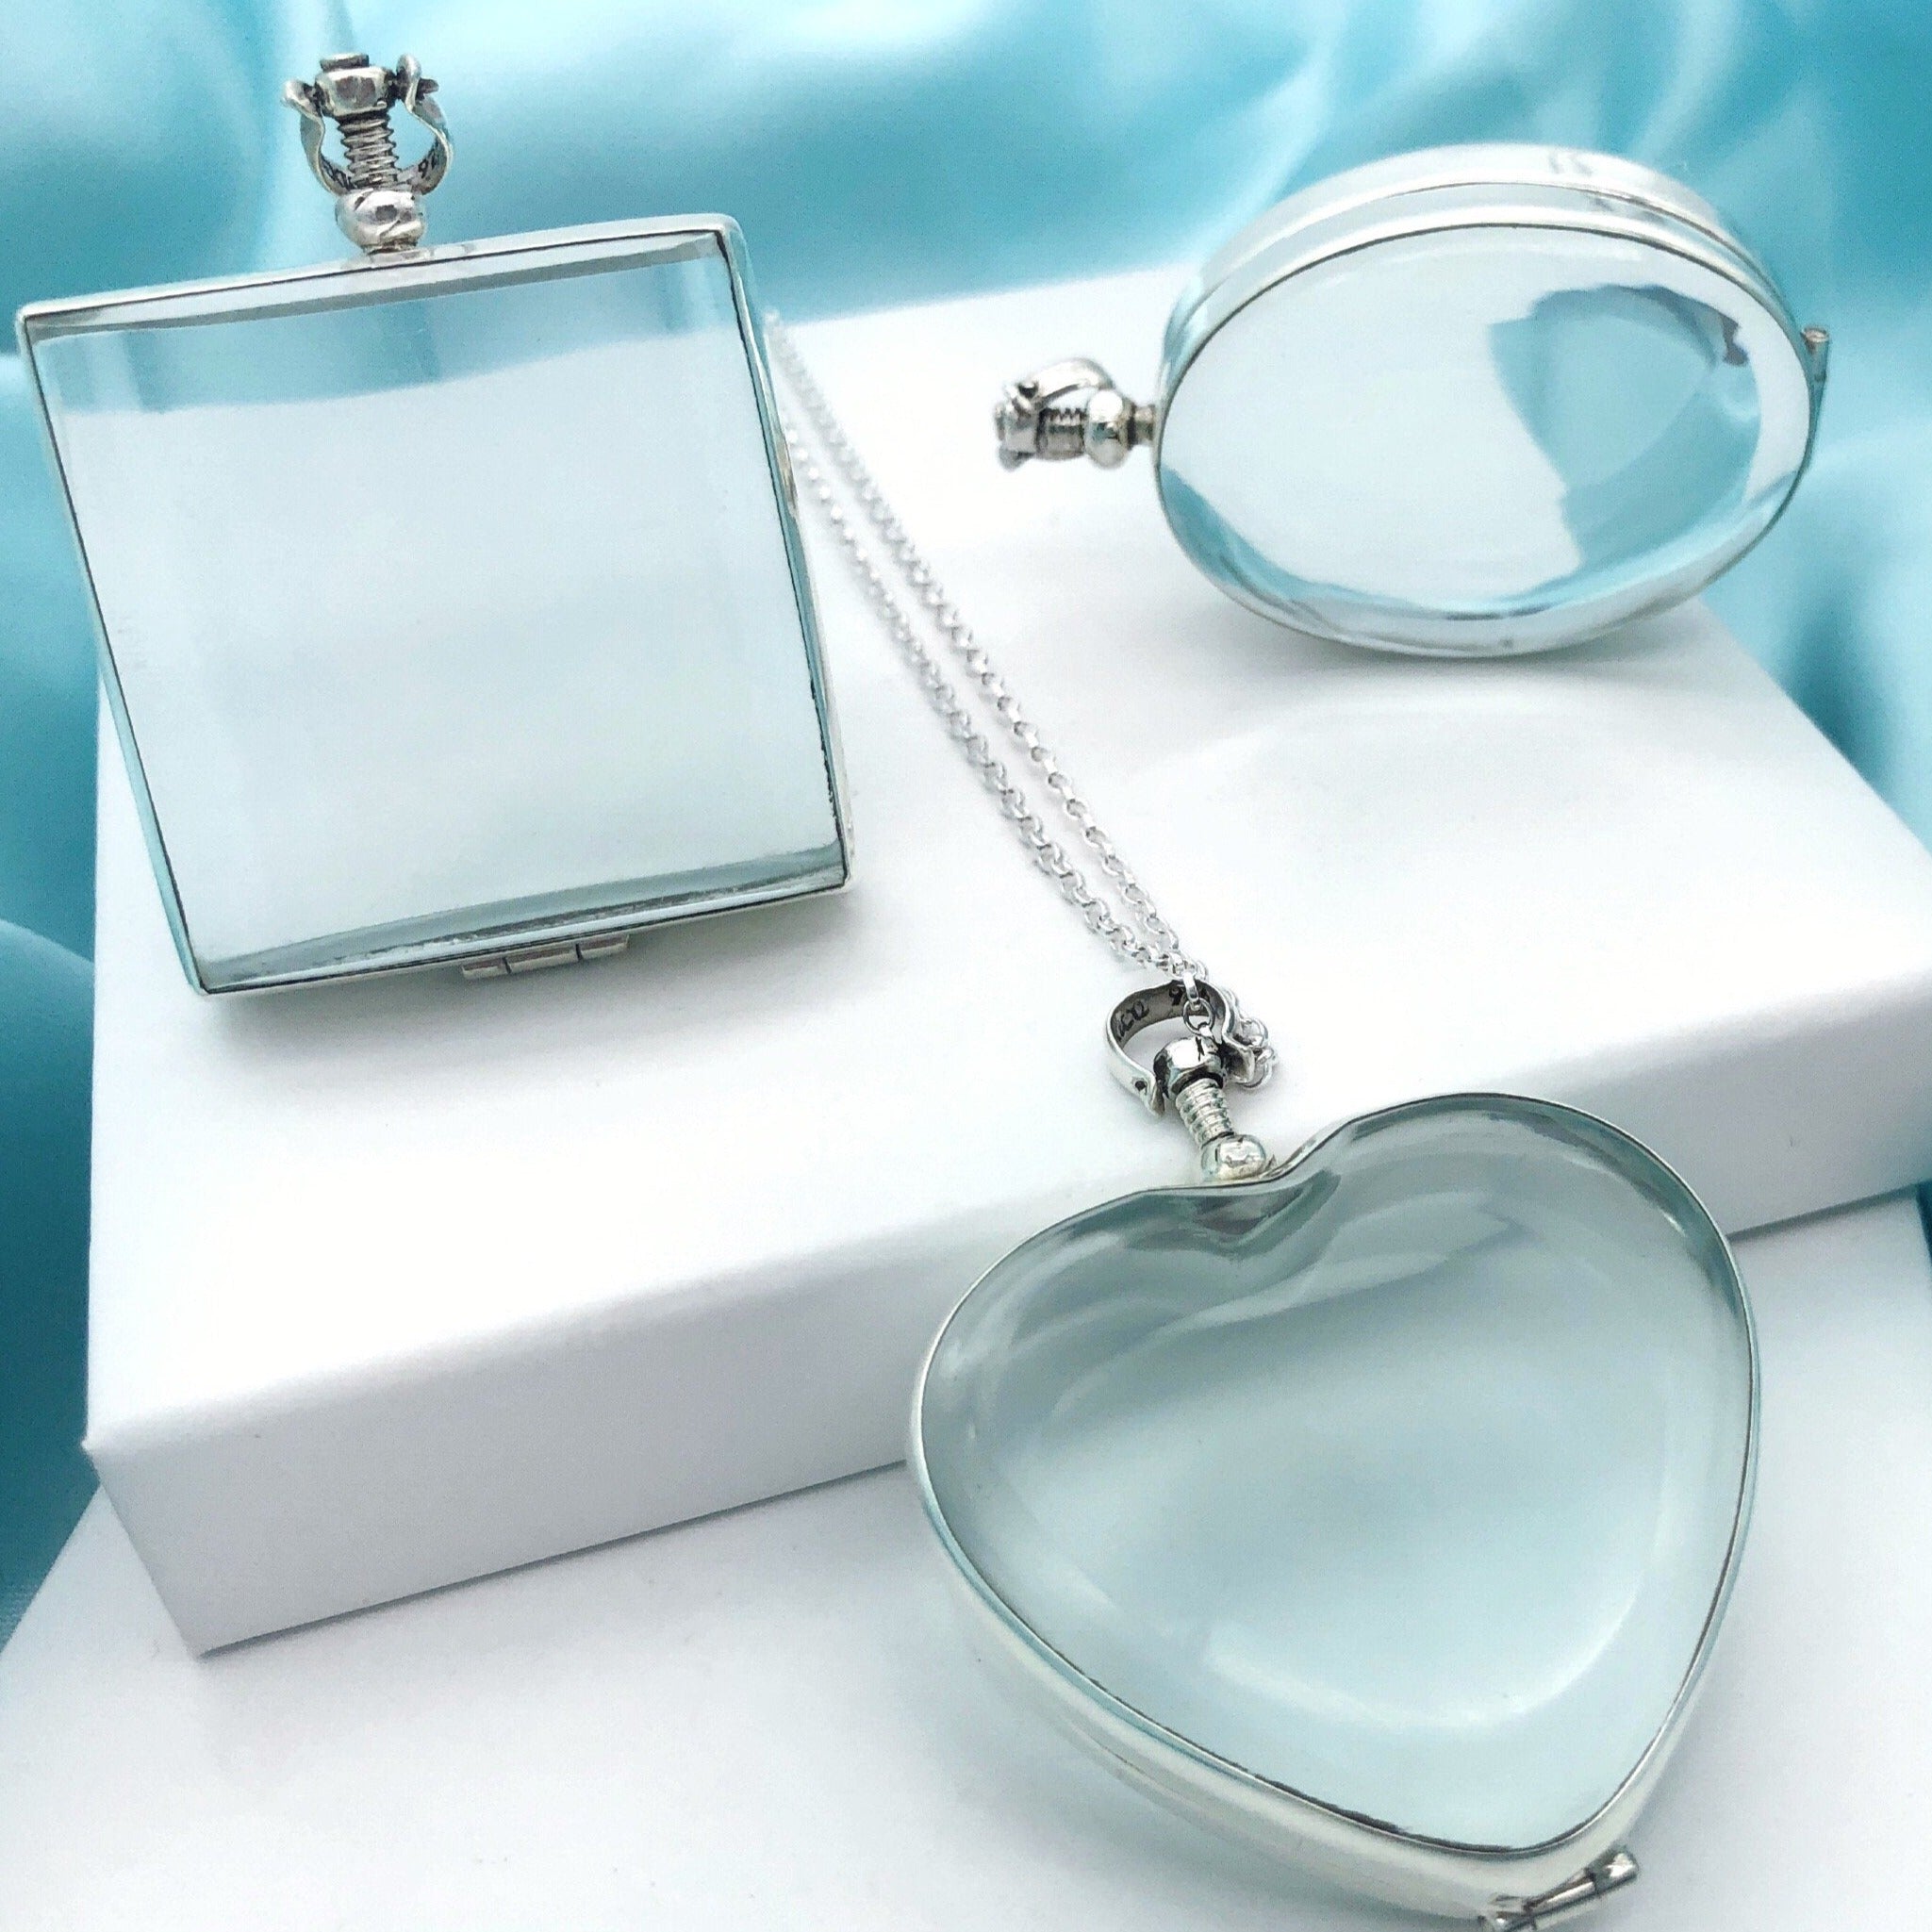 Handmade Personalised Jewellery Gifts for April Birthdays | Bish Bosh Becca